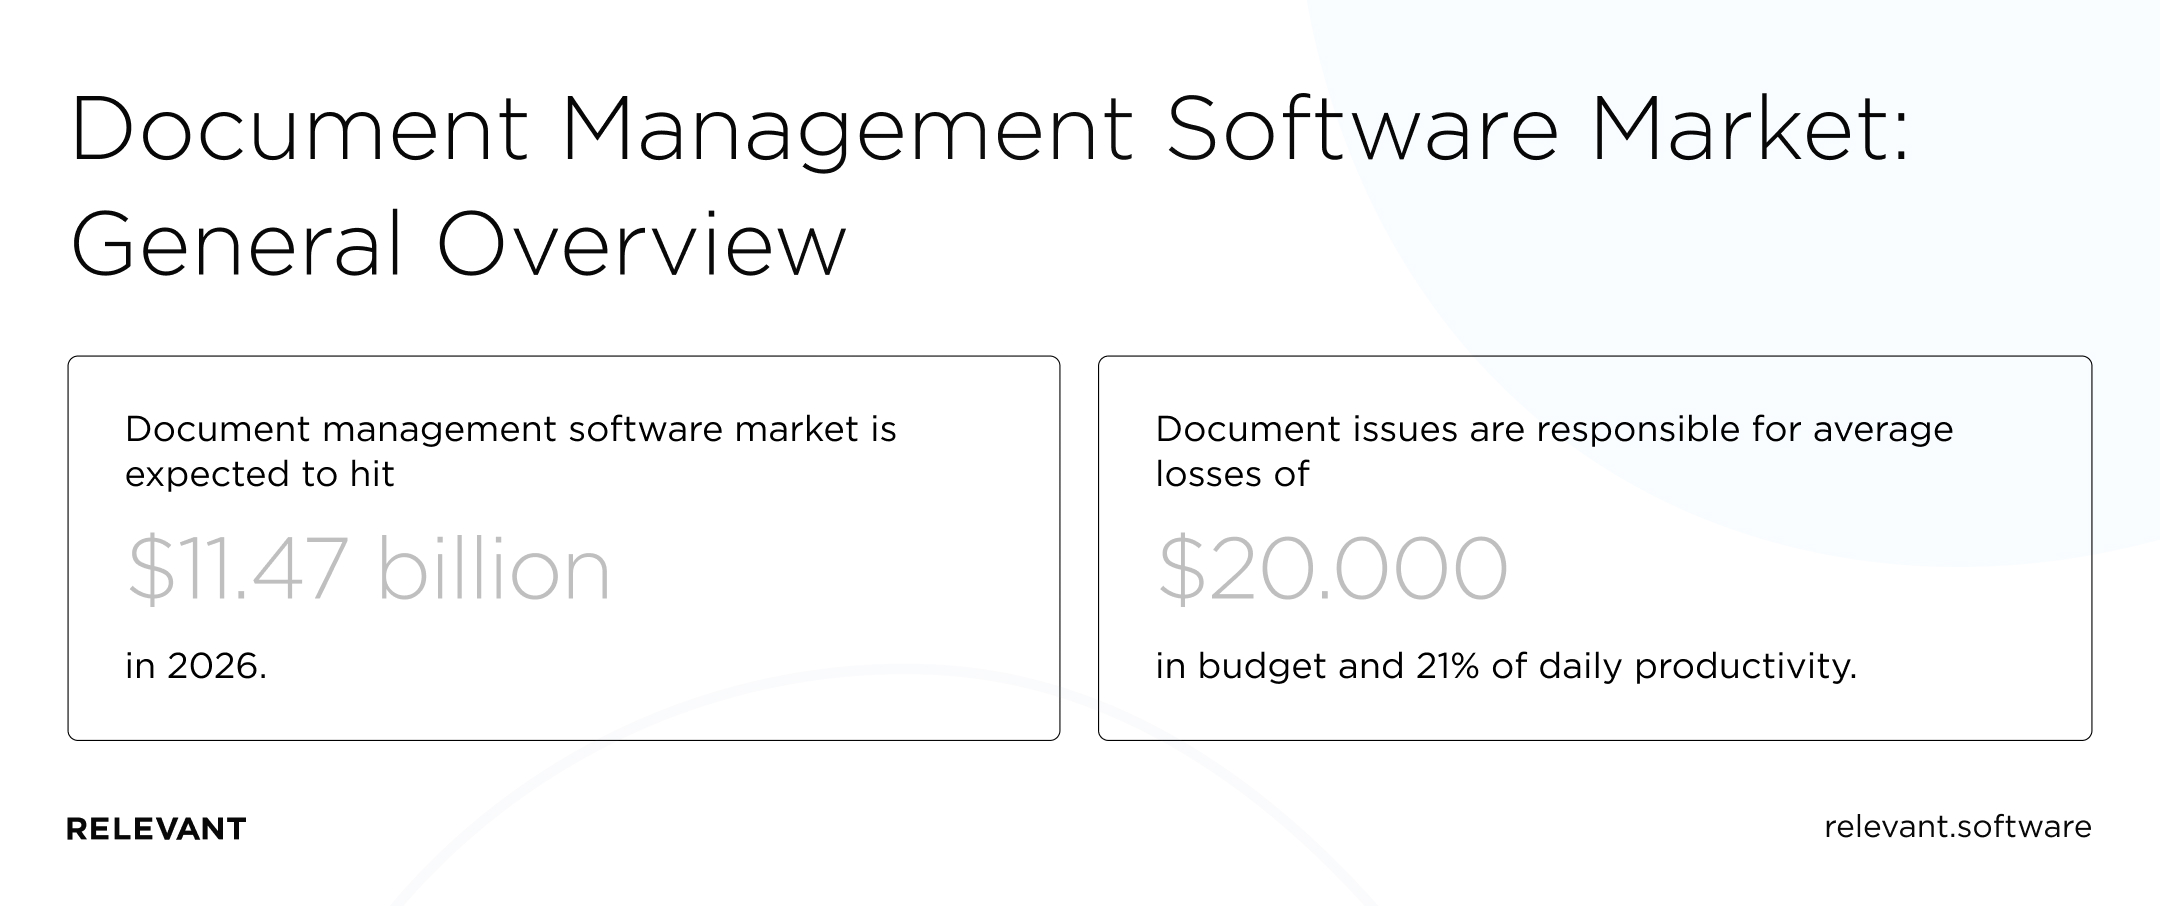 Document management software development market: General overview